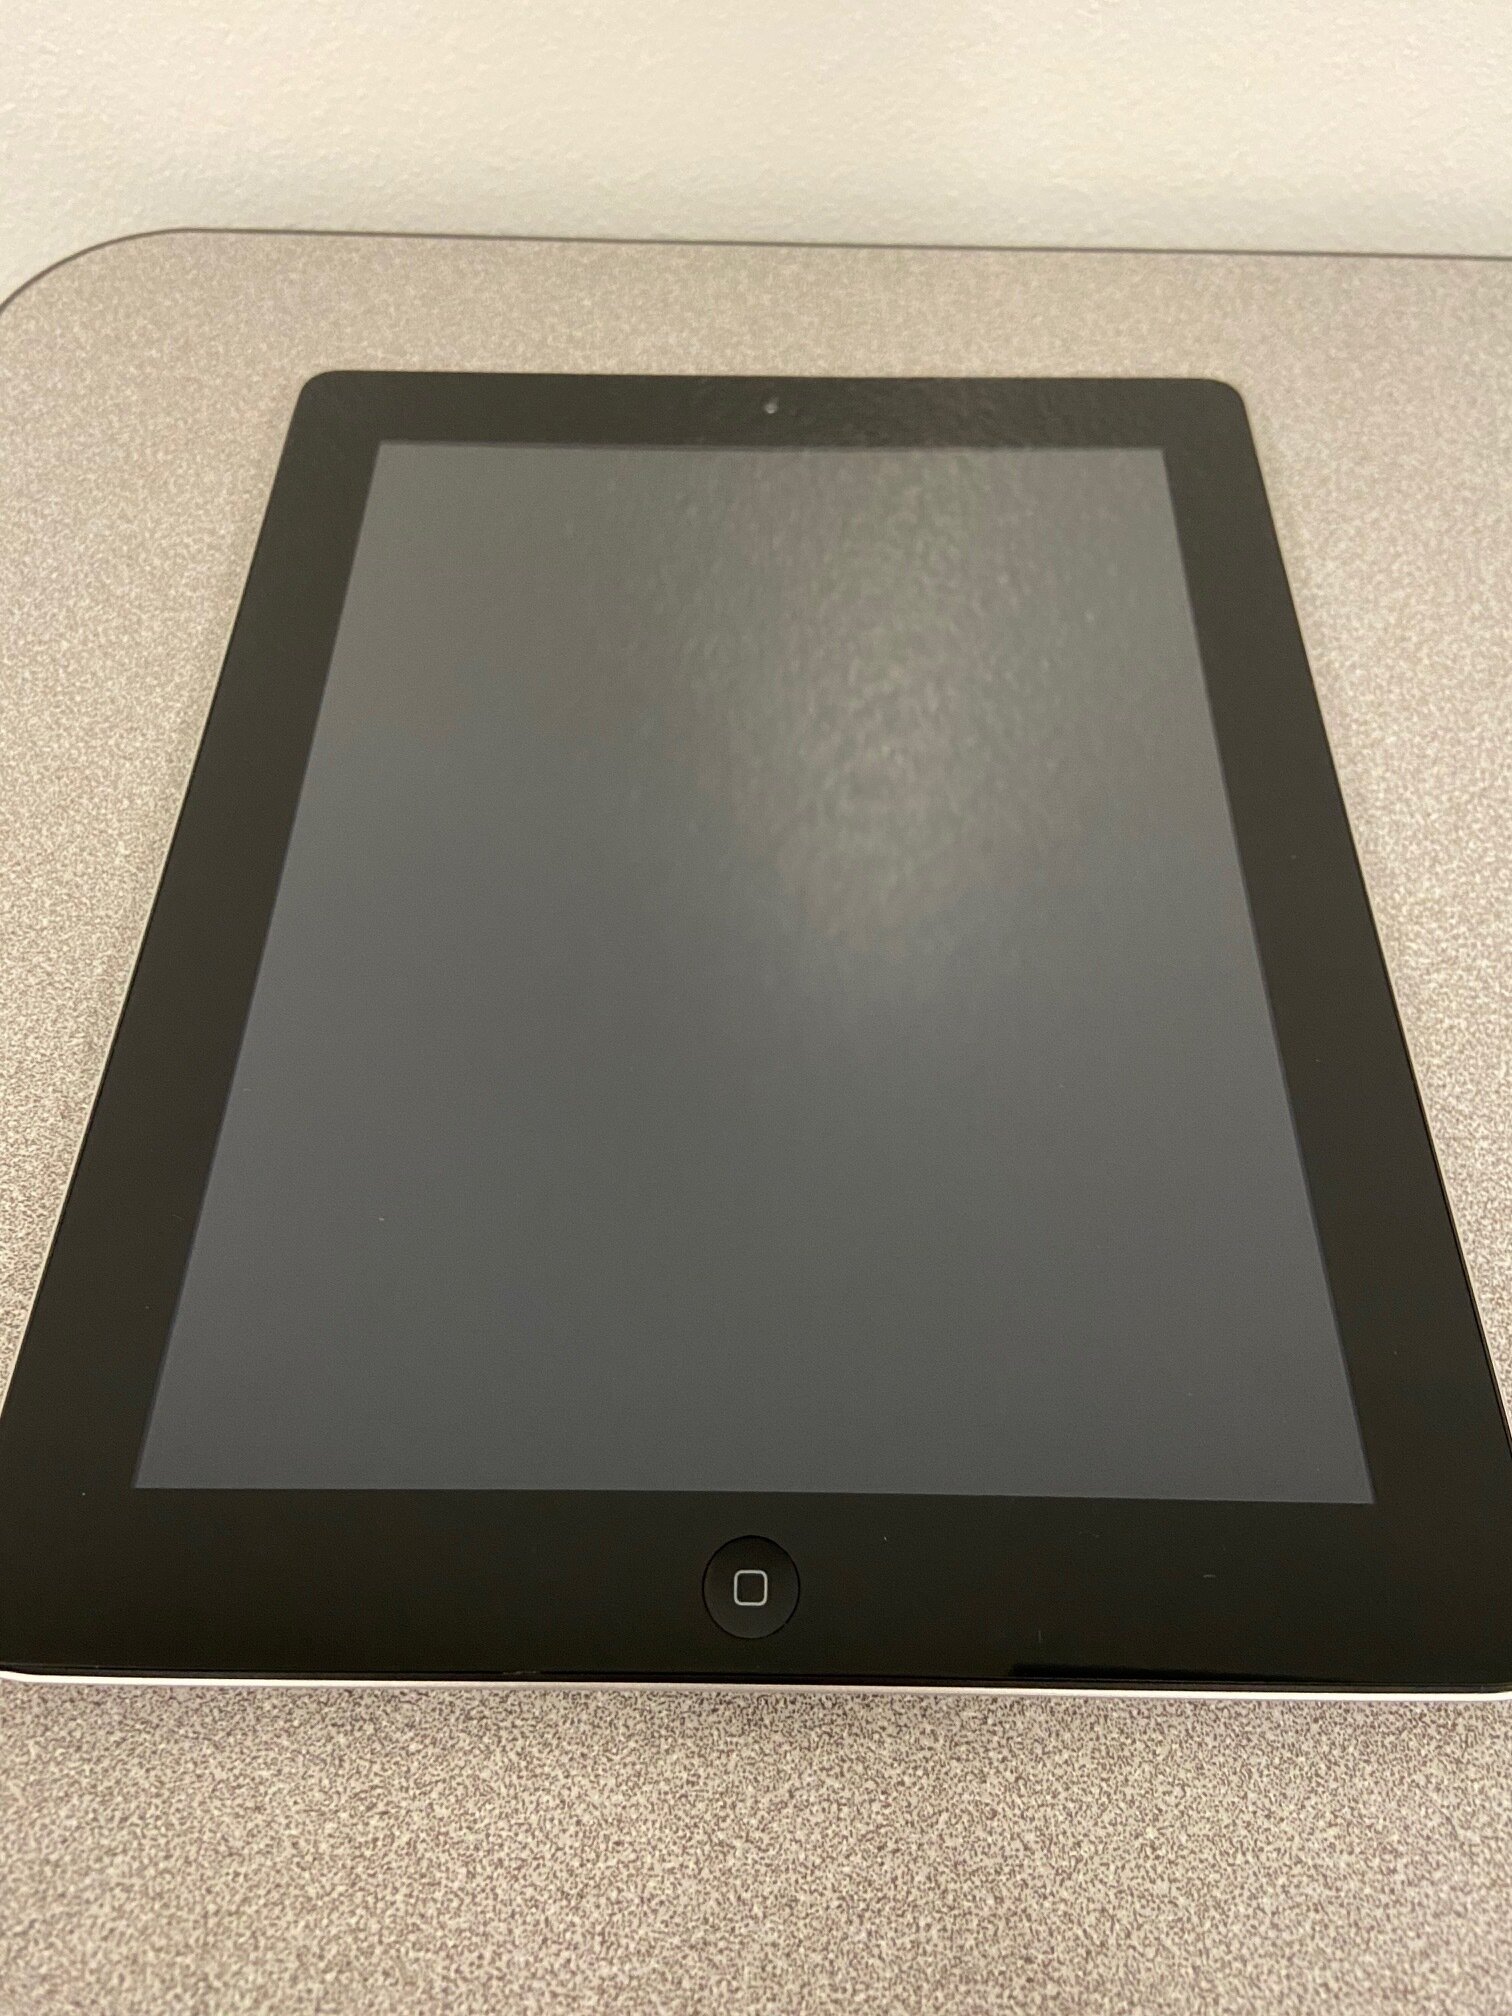 Apple iPad 2 16GB WiFi 2nd Genaration Tested Working A1395 